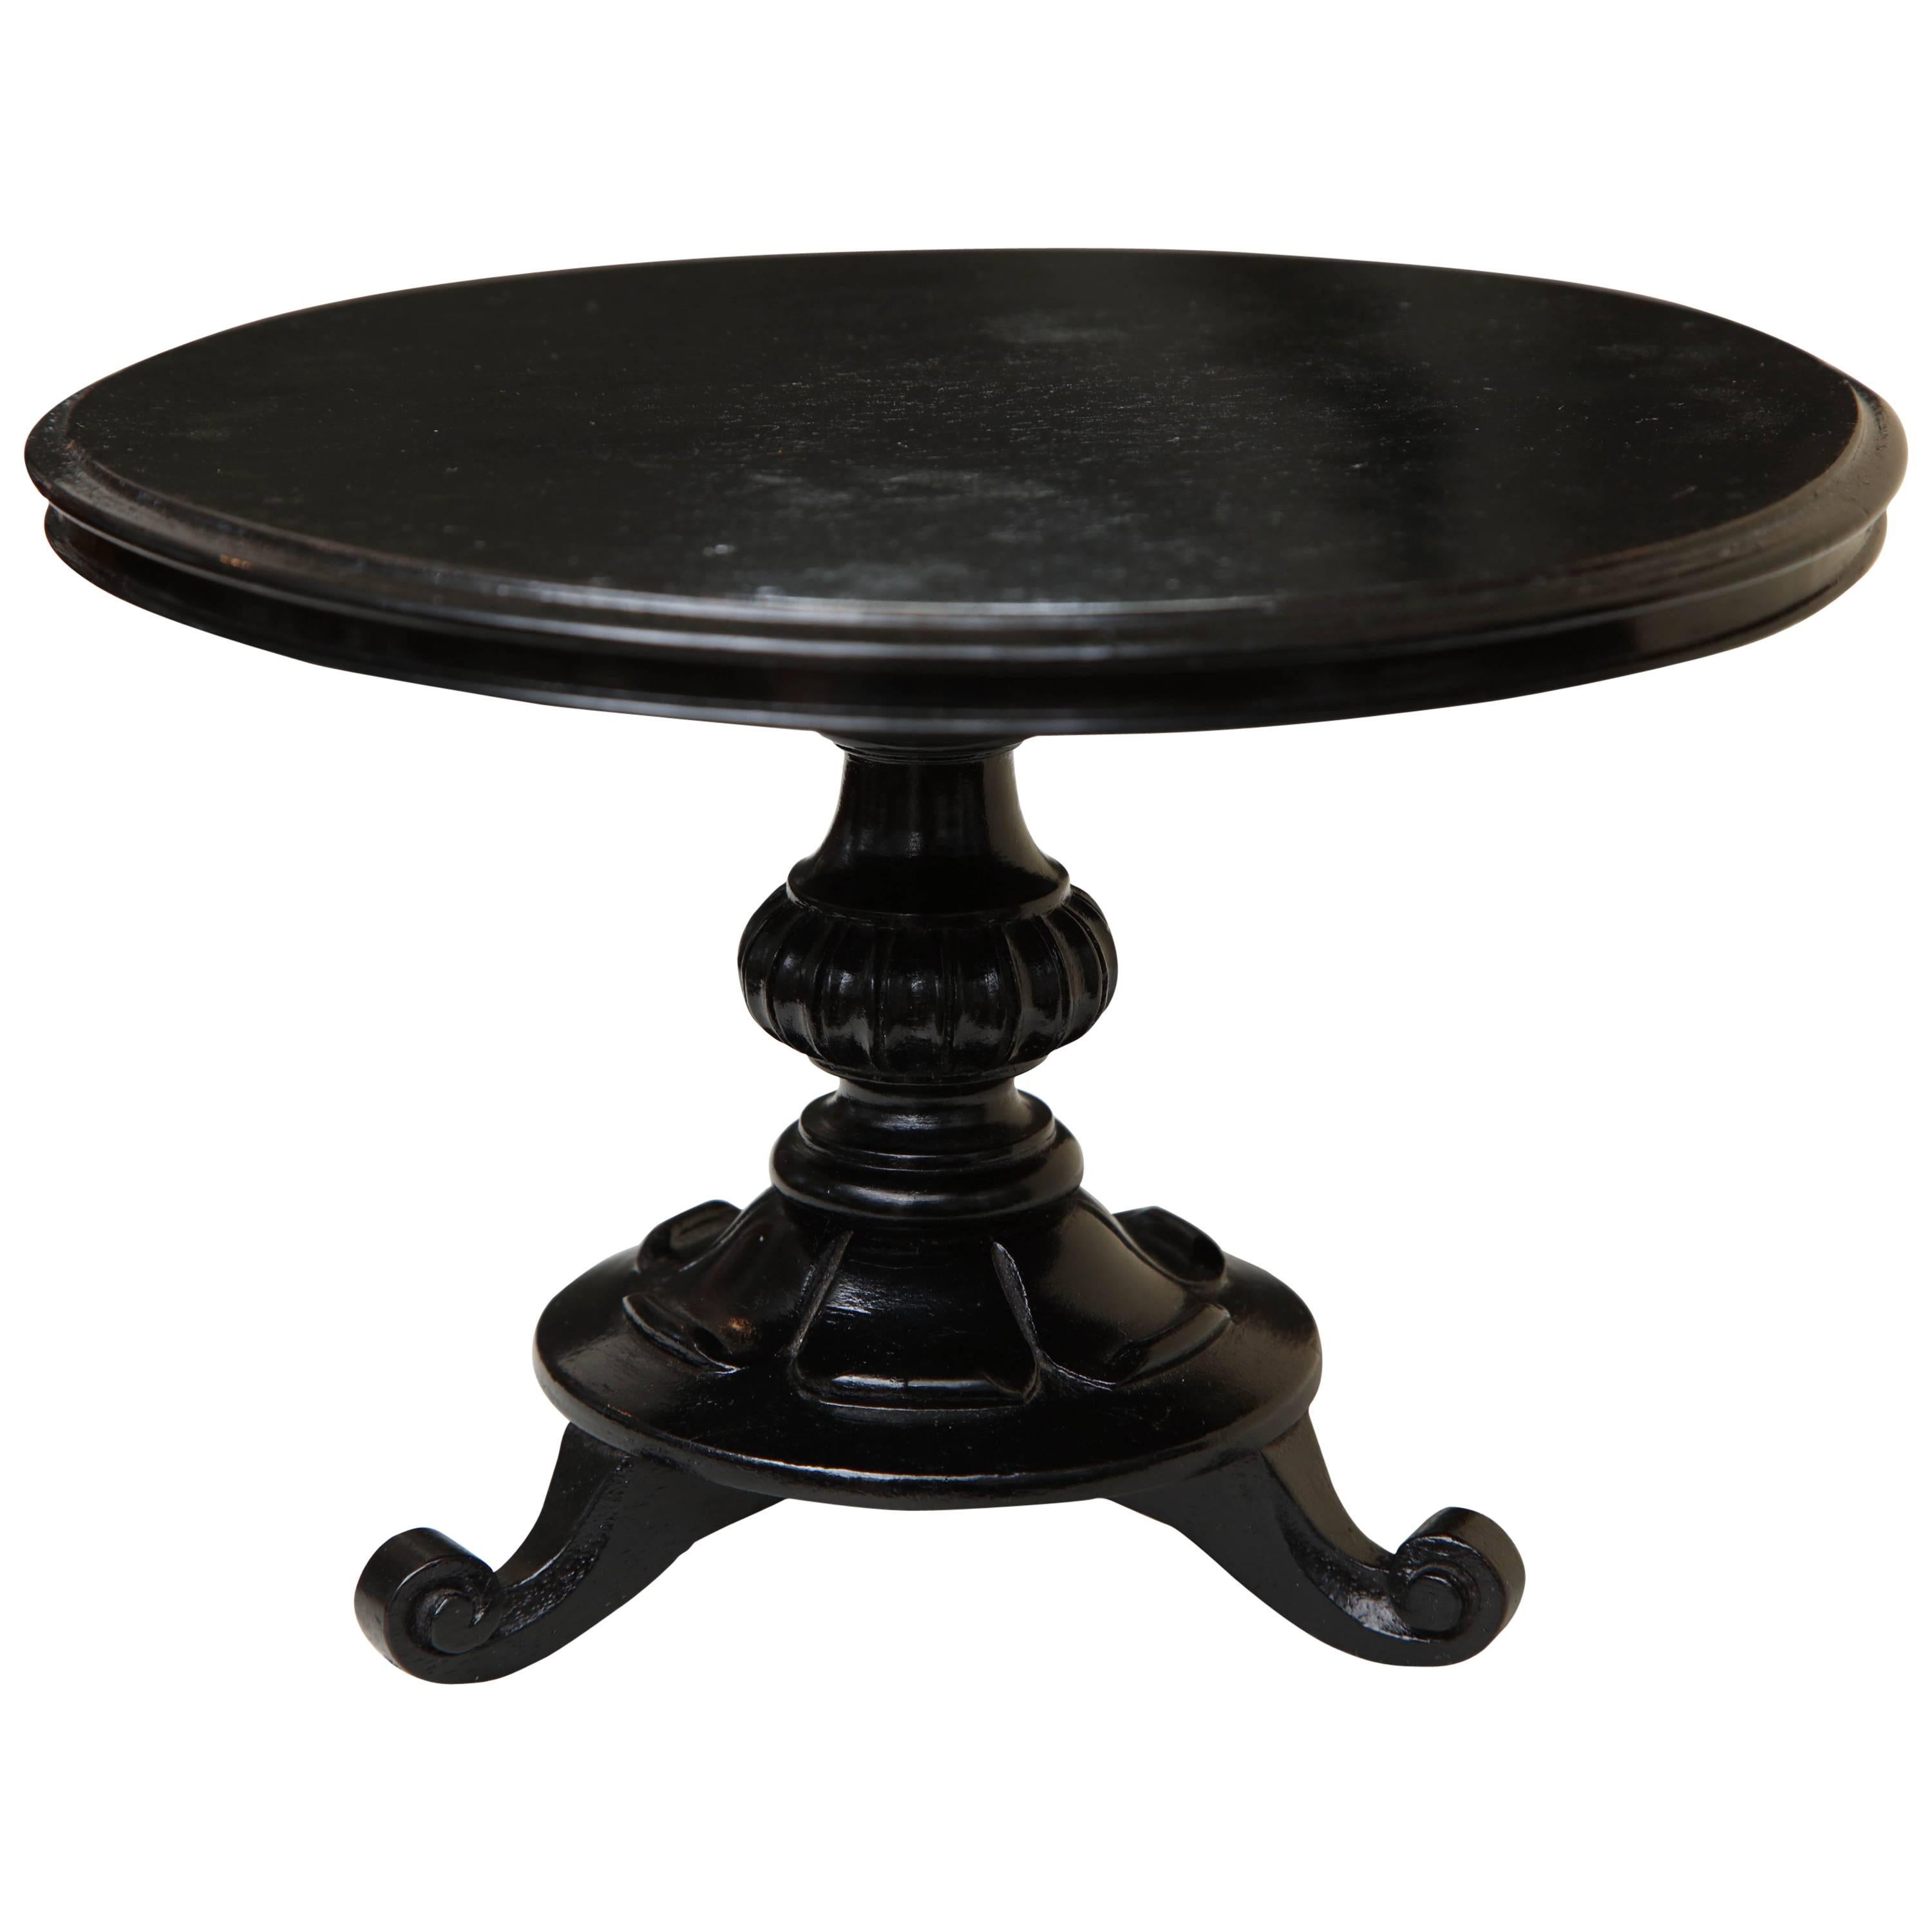 19th Century "Miniature" Tilt-Top Table